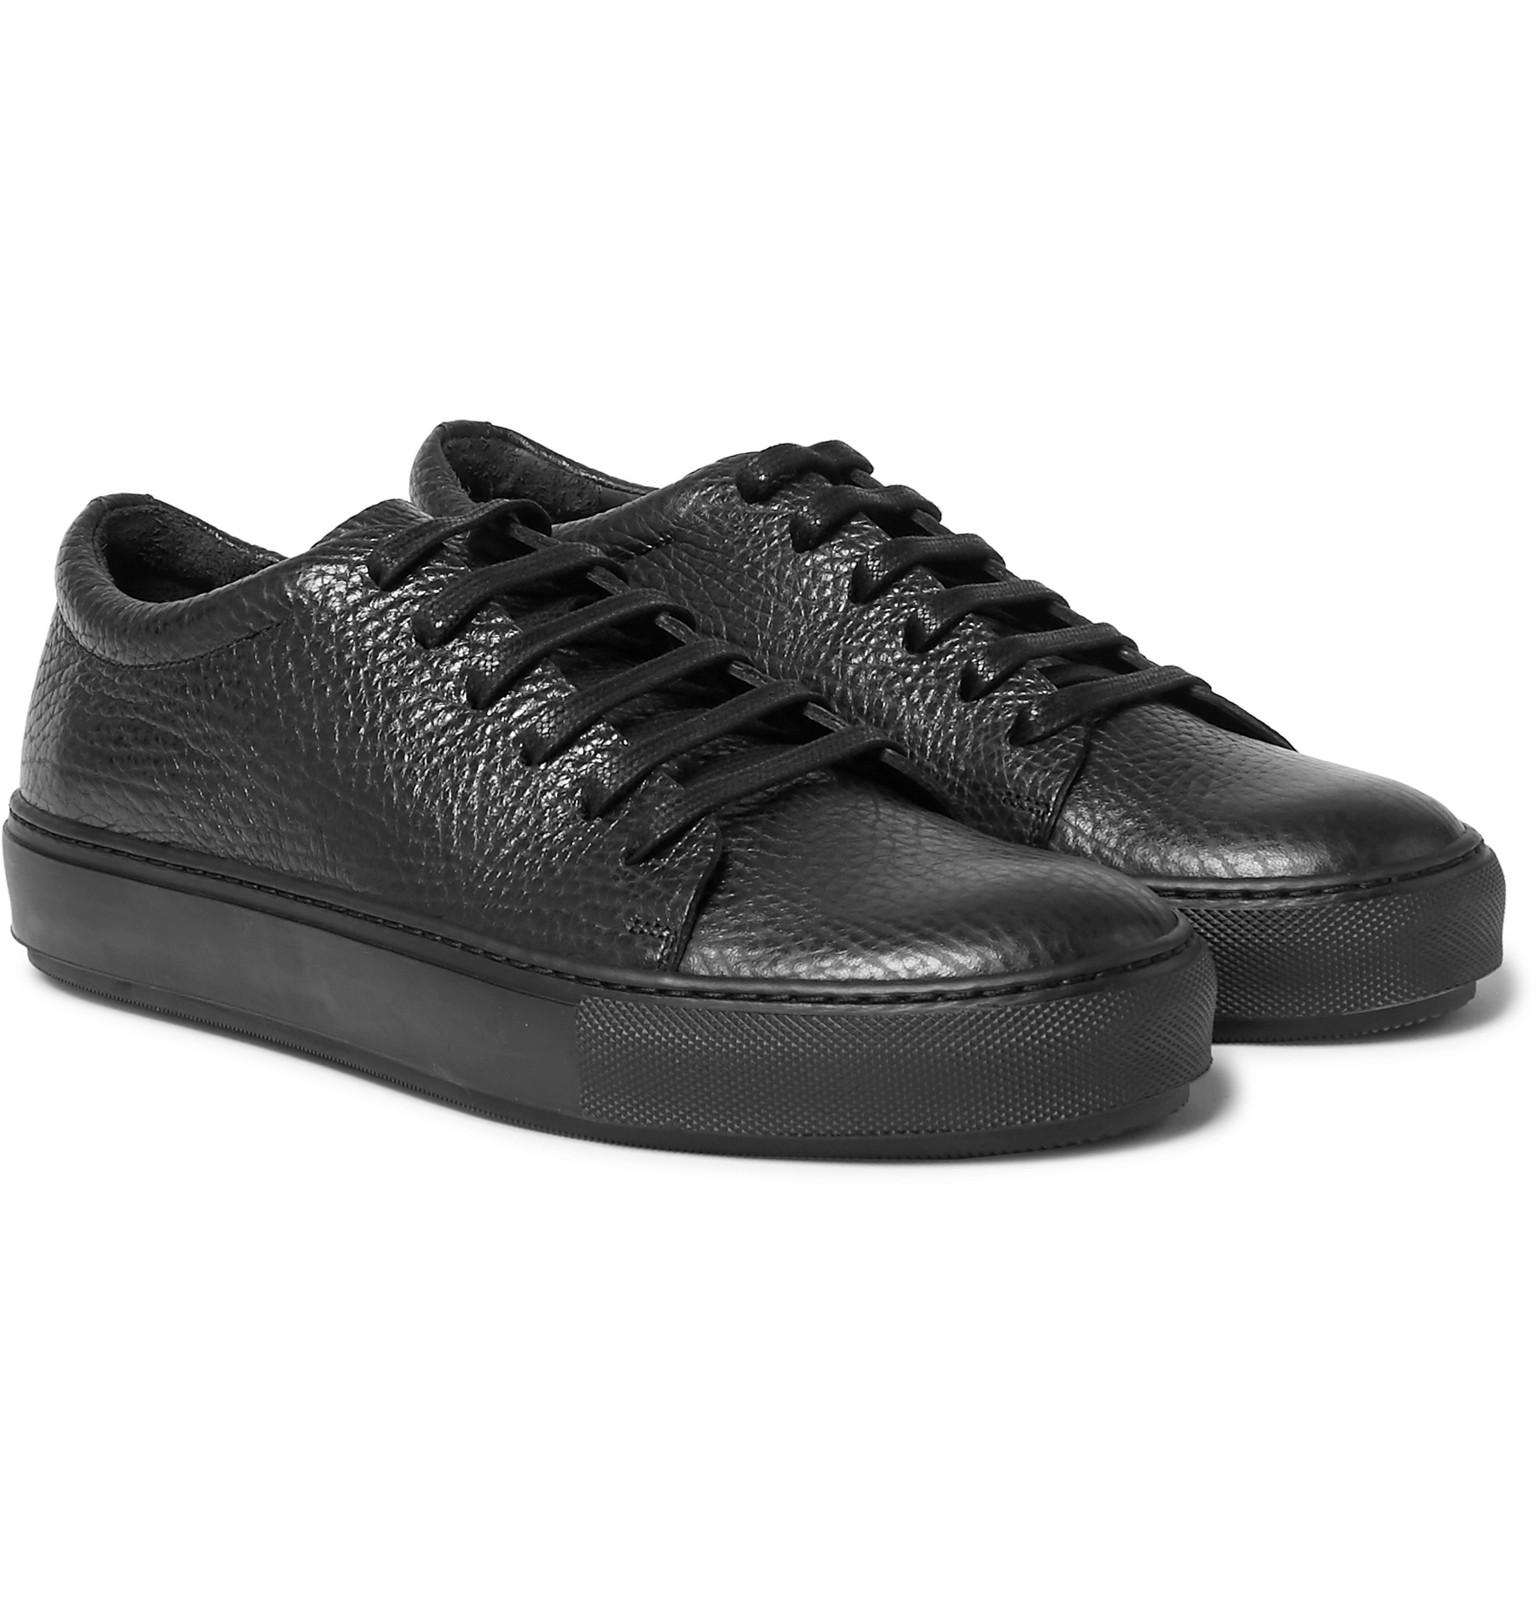 Acne Studios Adrian Full-grain Leather Sneakers in Black for Men - Lyst